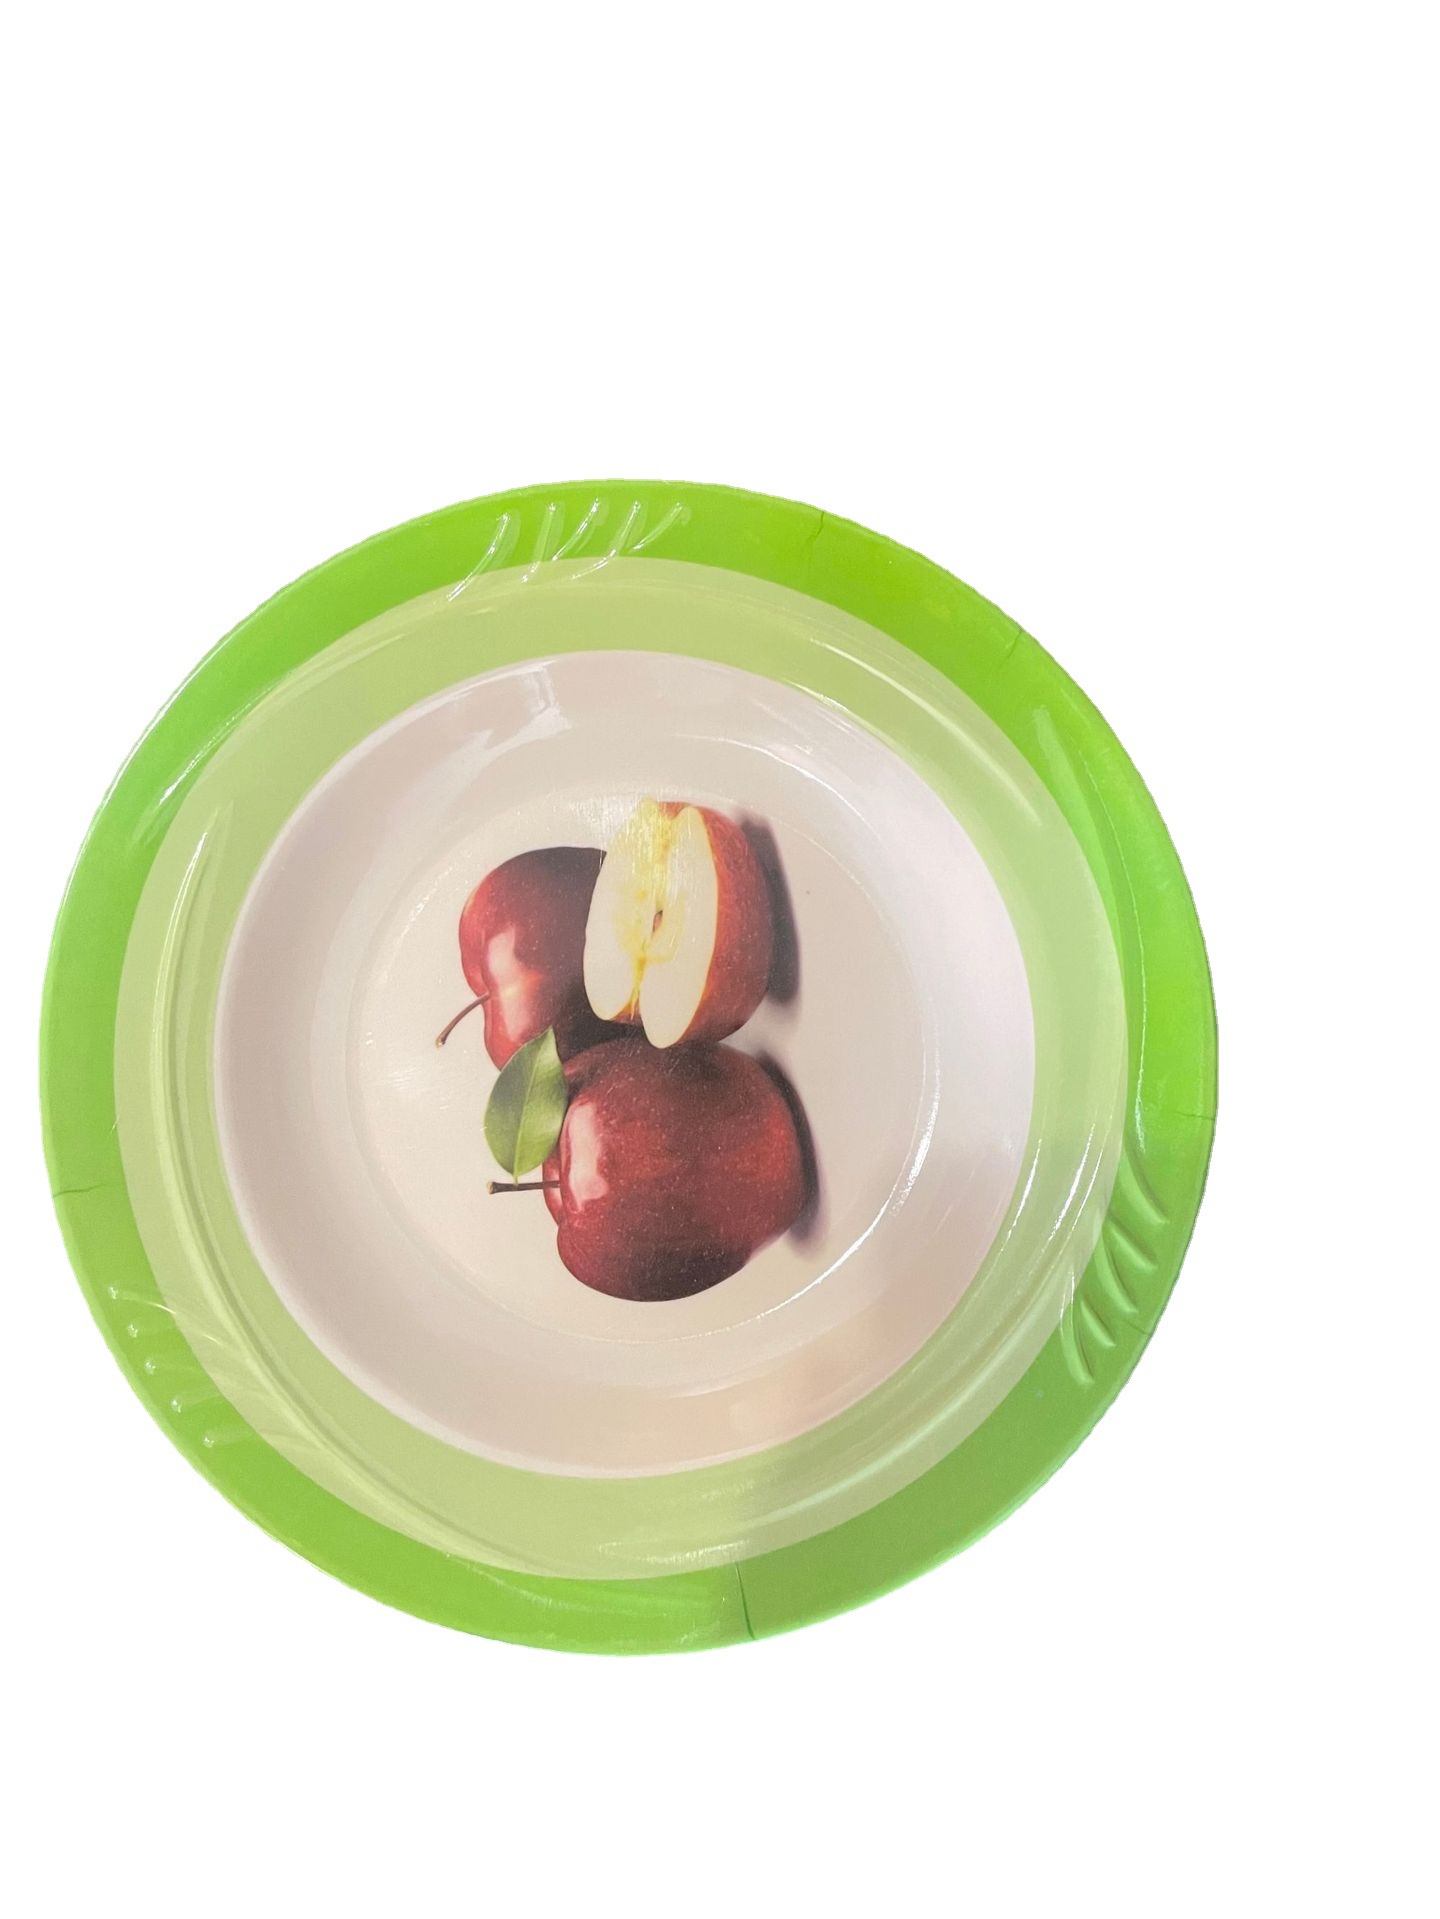 Melamine Dish Household Imitation Porcelain Dishware Wholesale Melamine Dish 9-Inch Plate Export Beige Decals